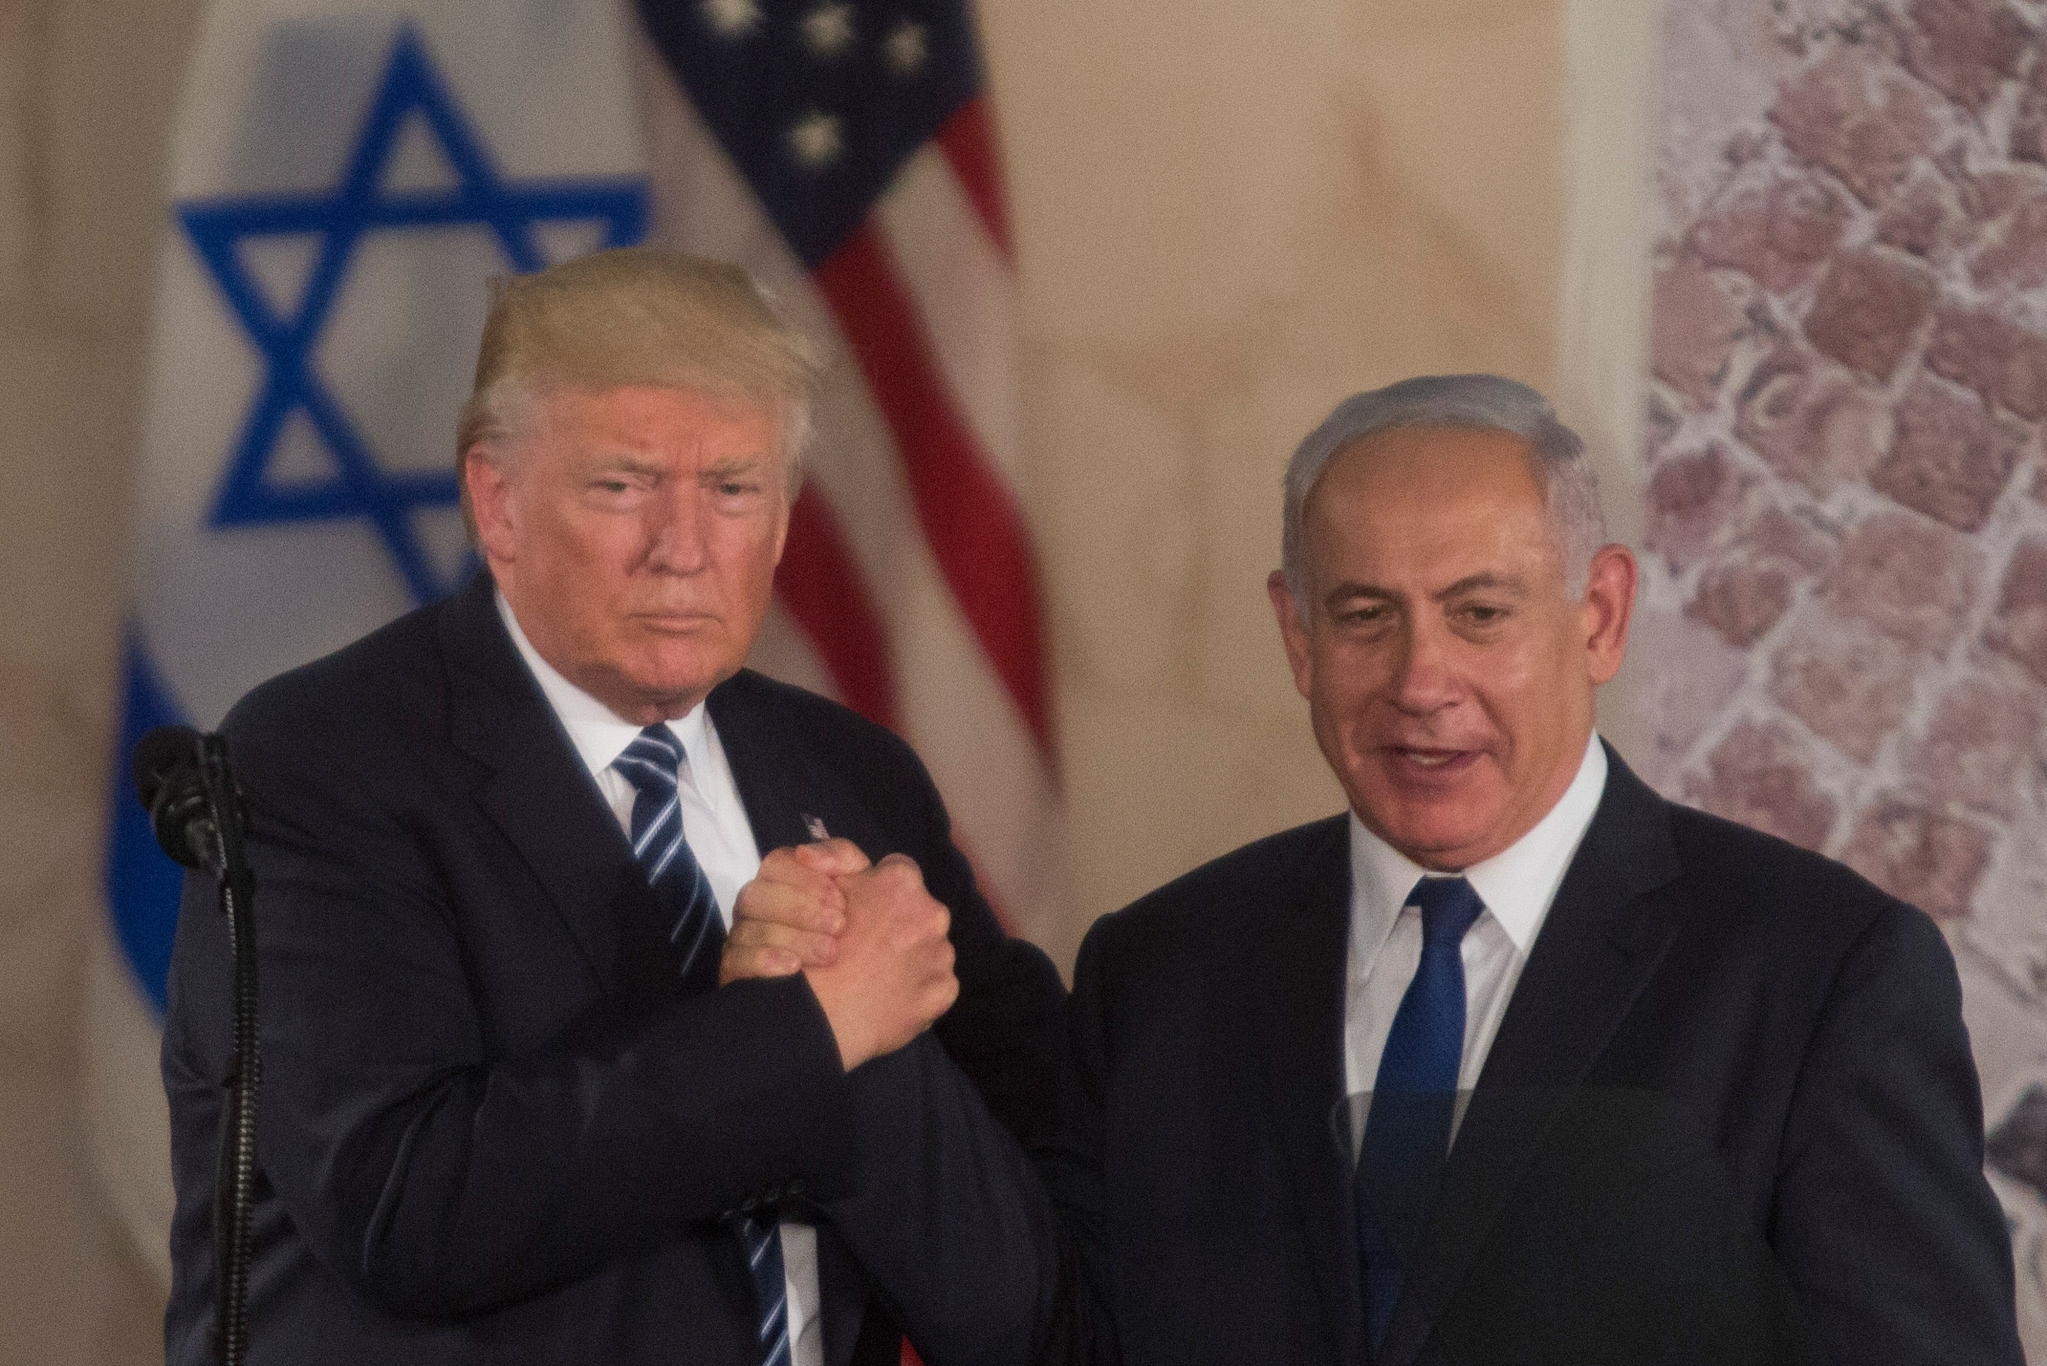 Trump and Netanyahu at the Israel Museum in Jerusalem (Lior Mizrahi/Getty Images)